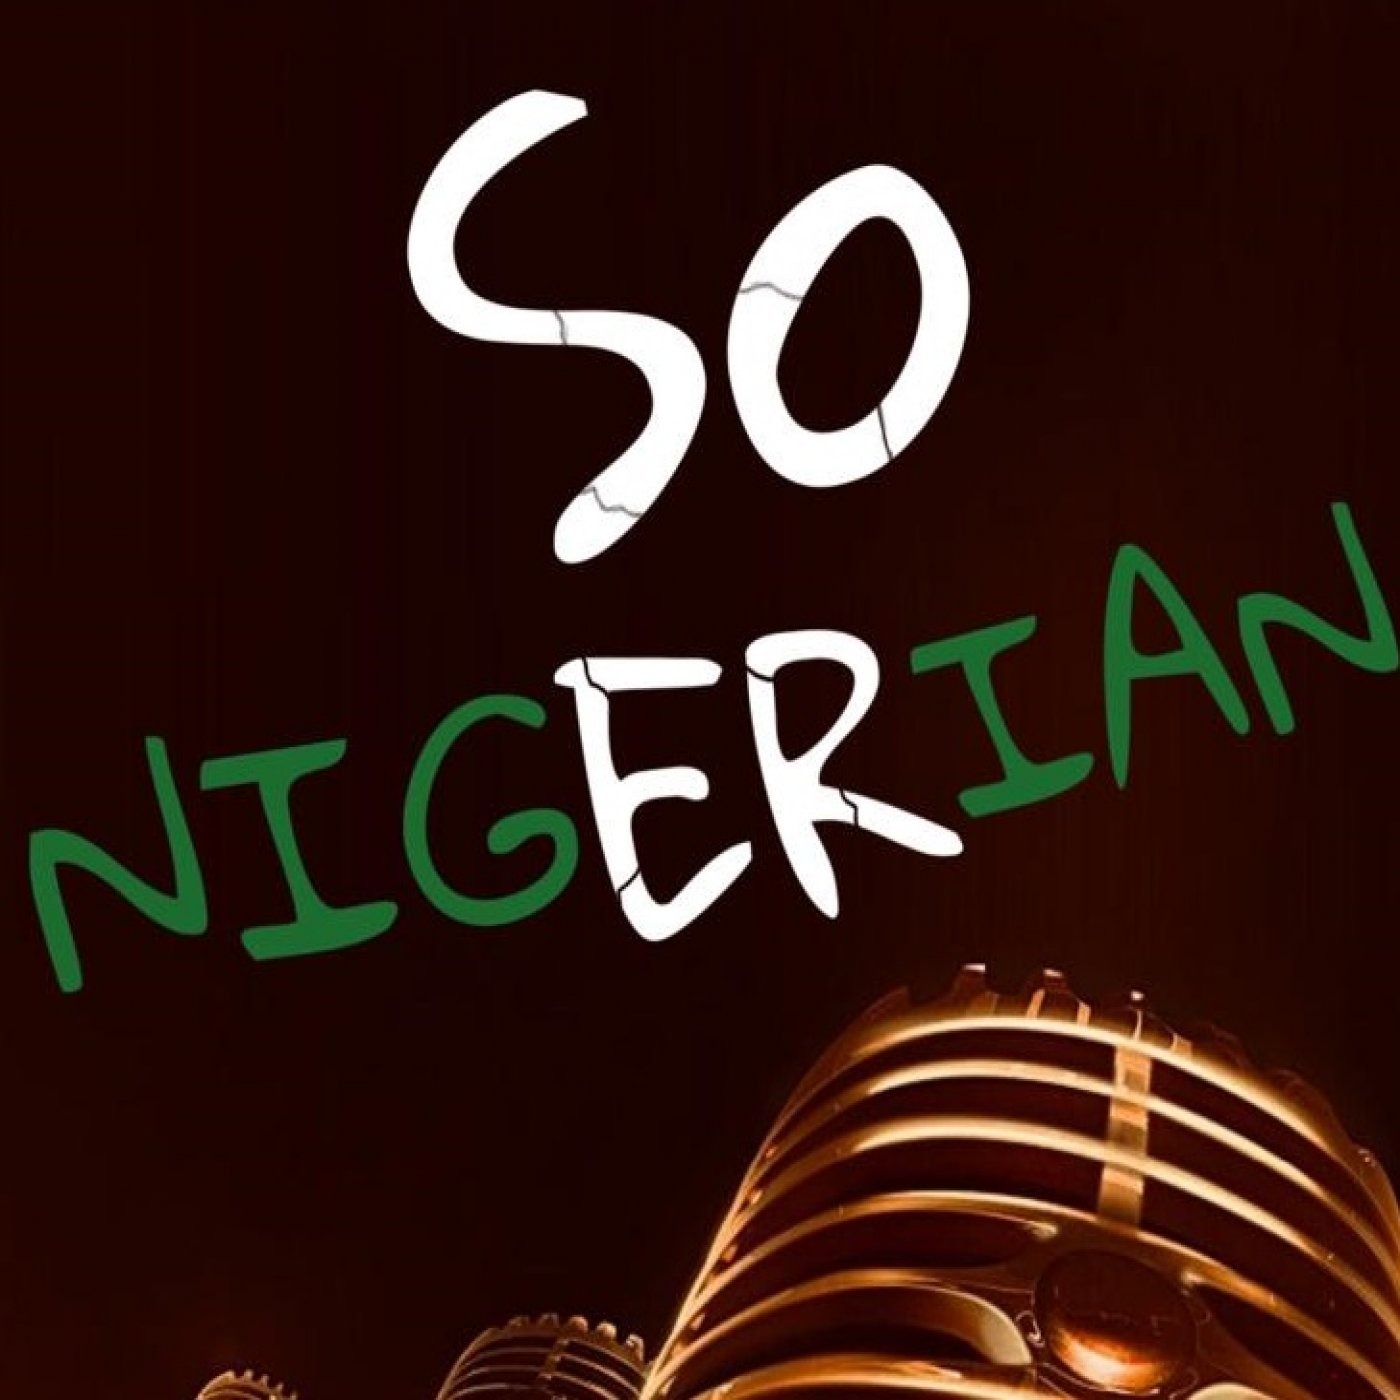 So Nigerian podcast